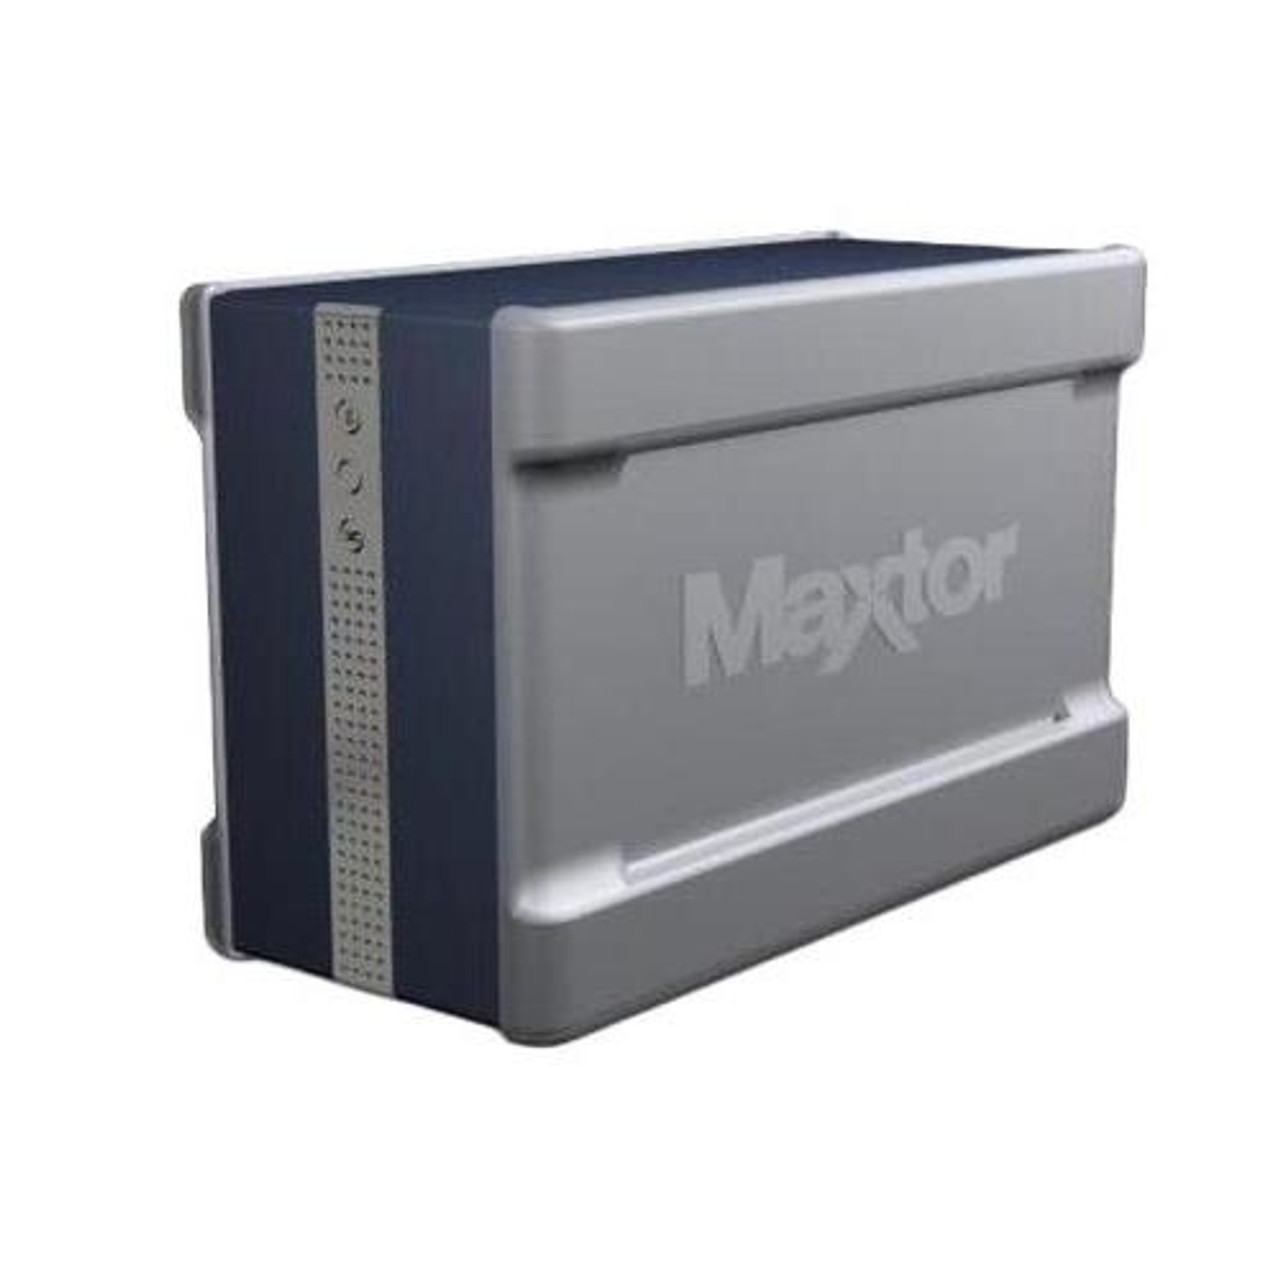 Maxtor Shared Storage II